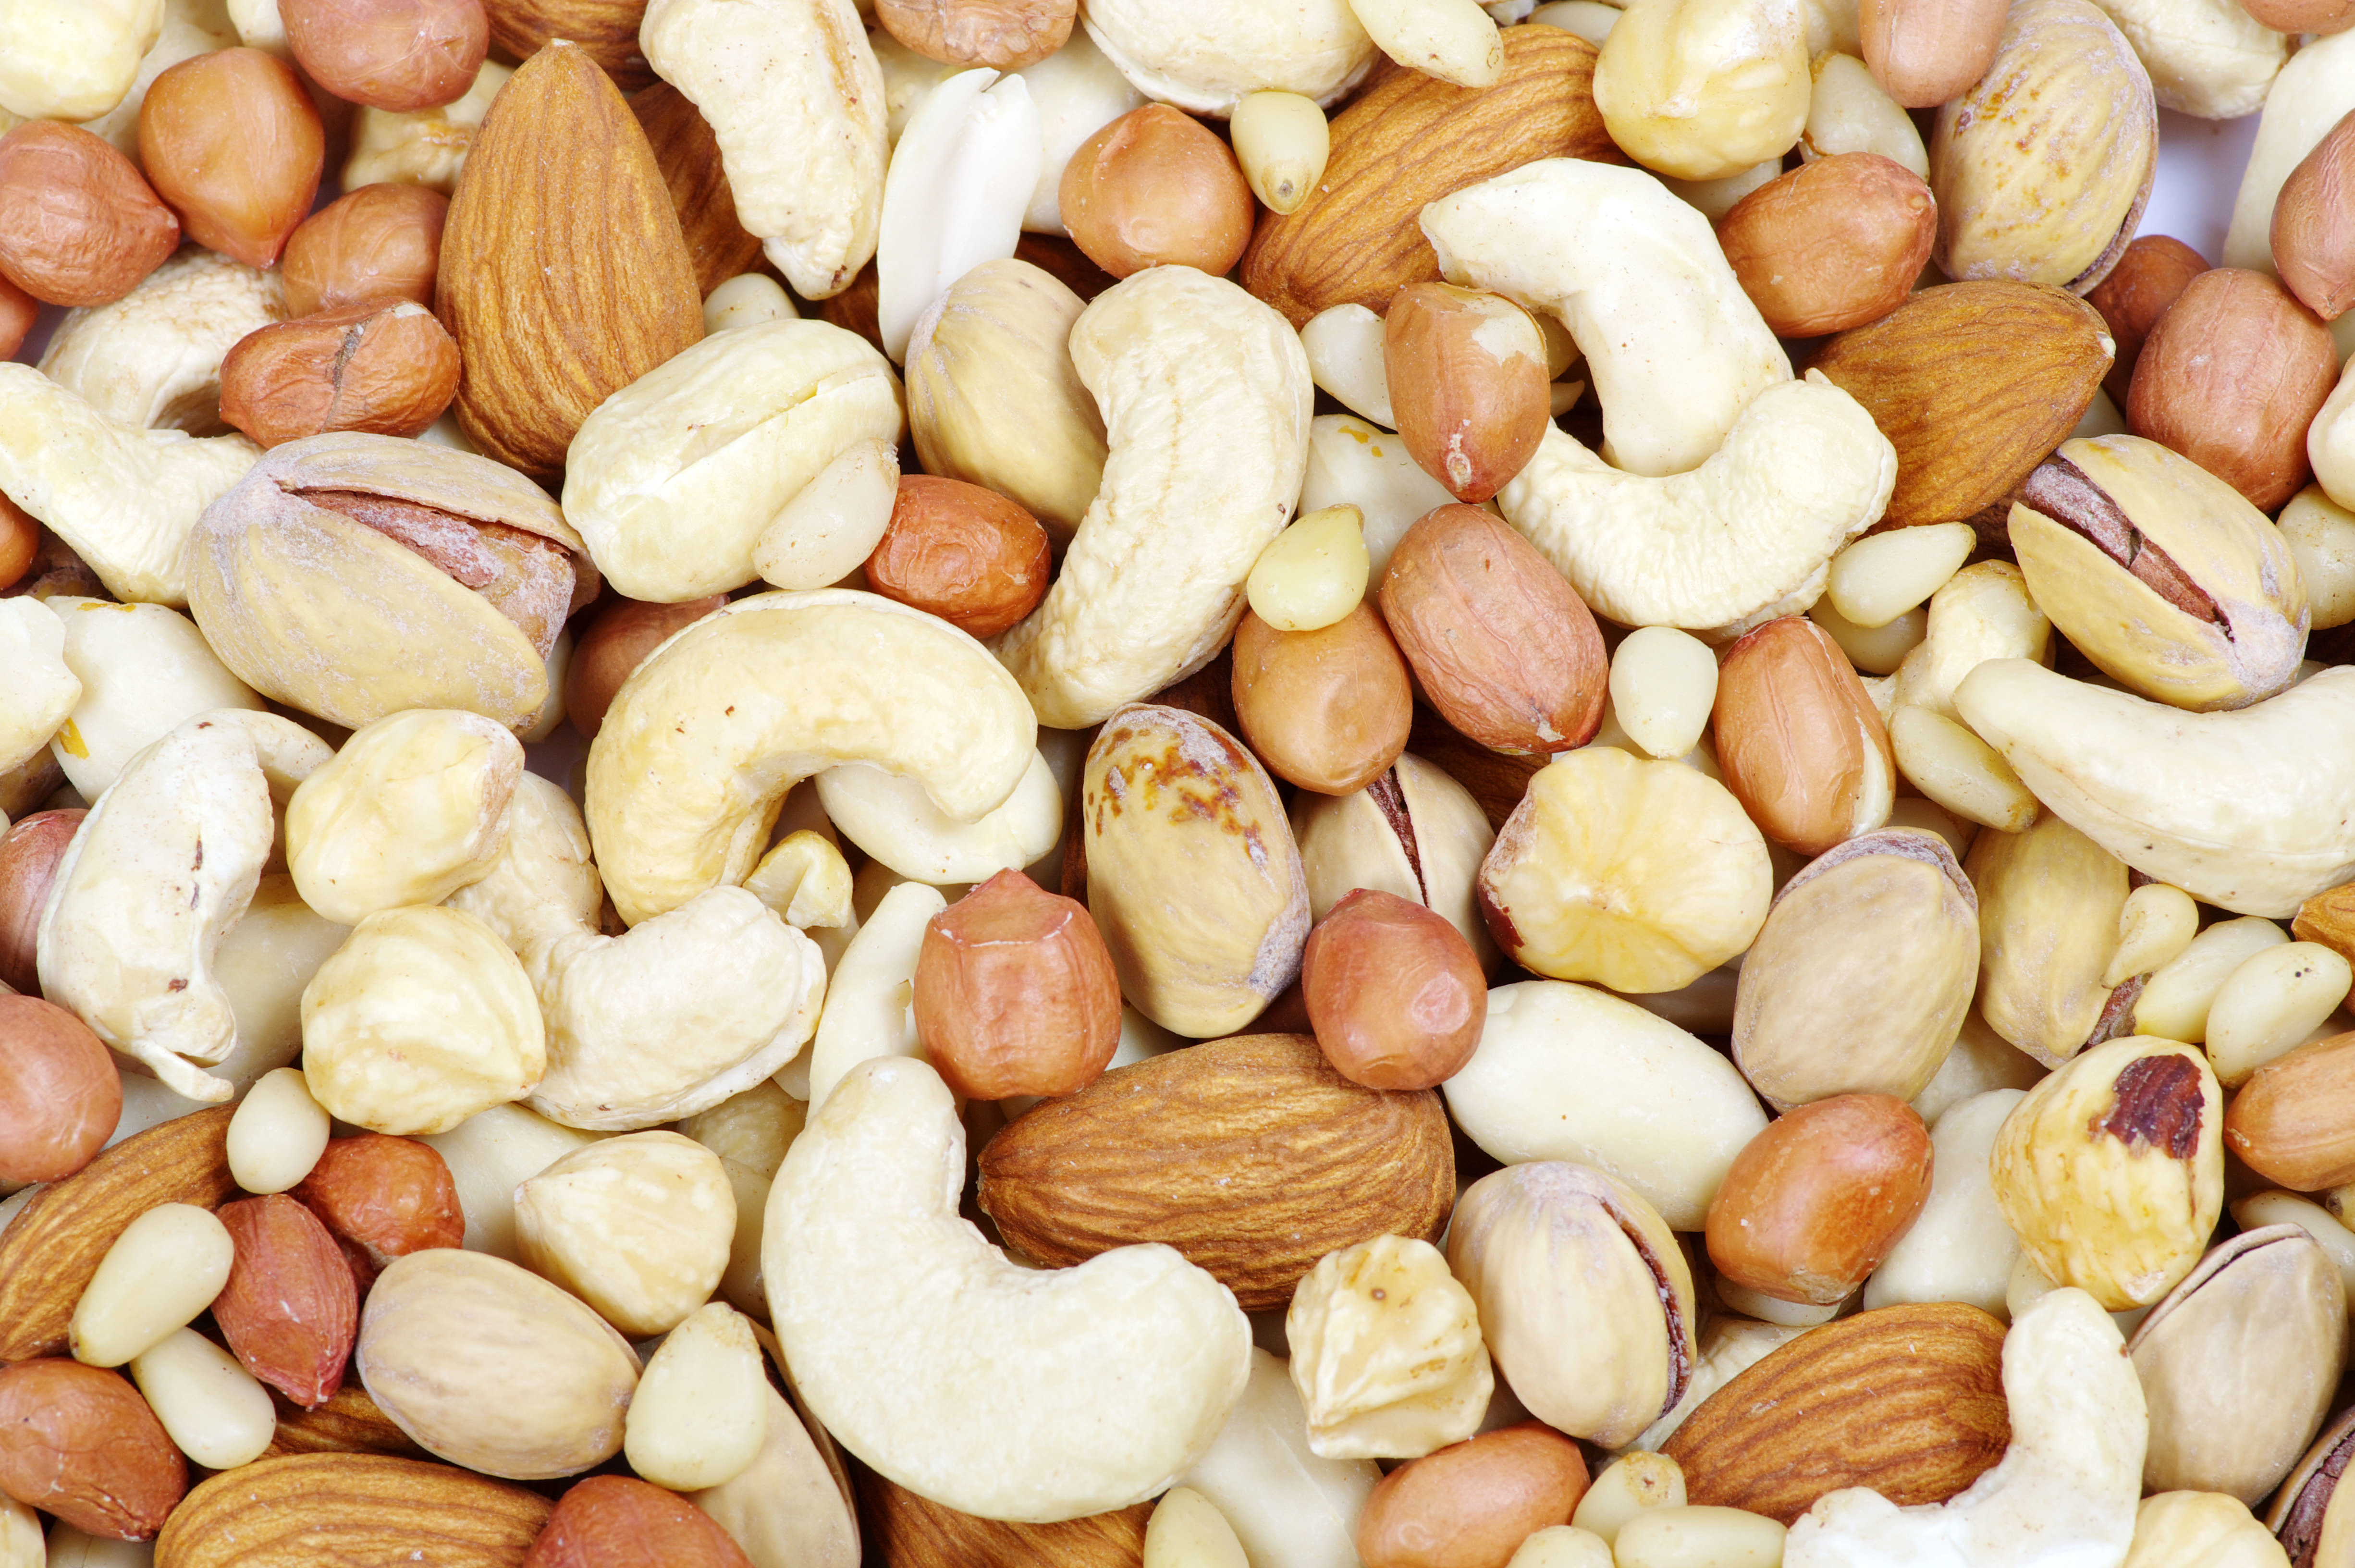 Как хранить орехи в домашних условиях?